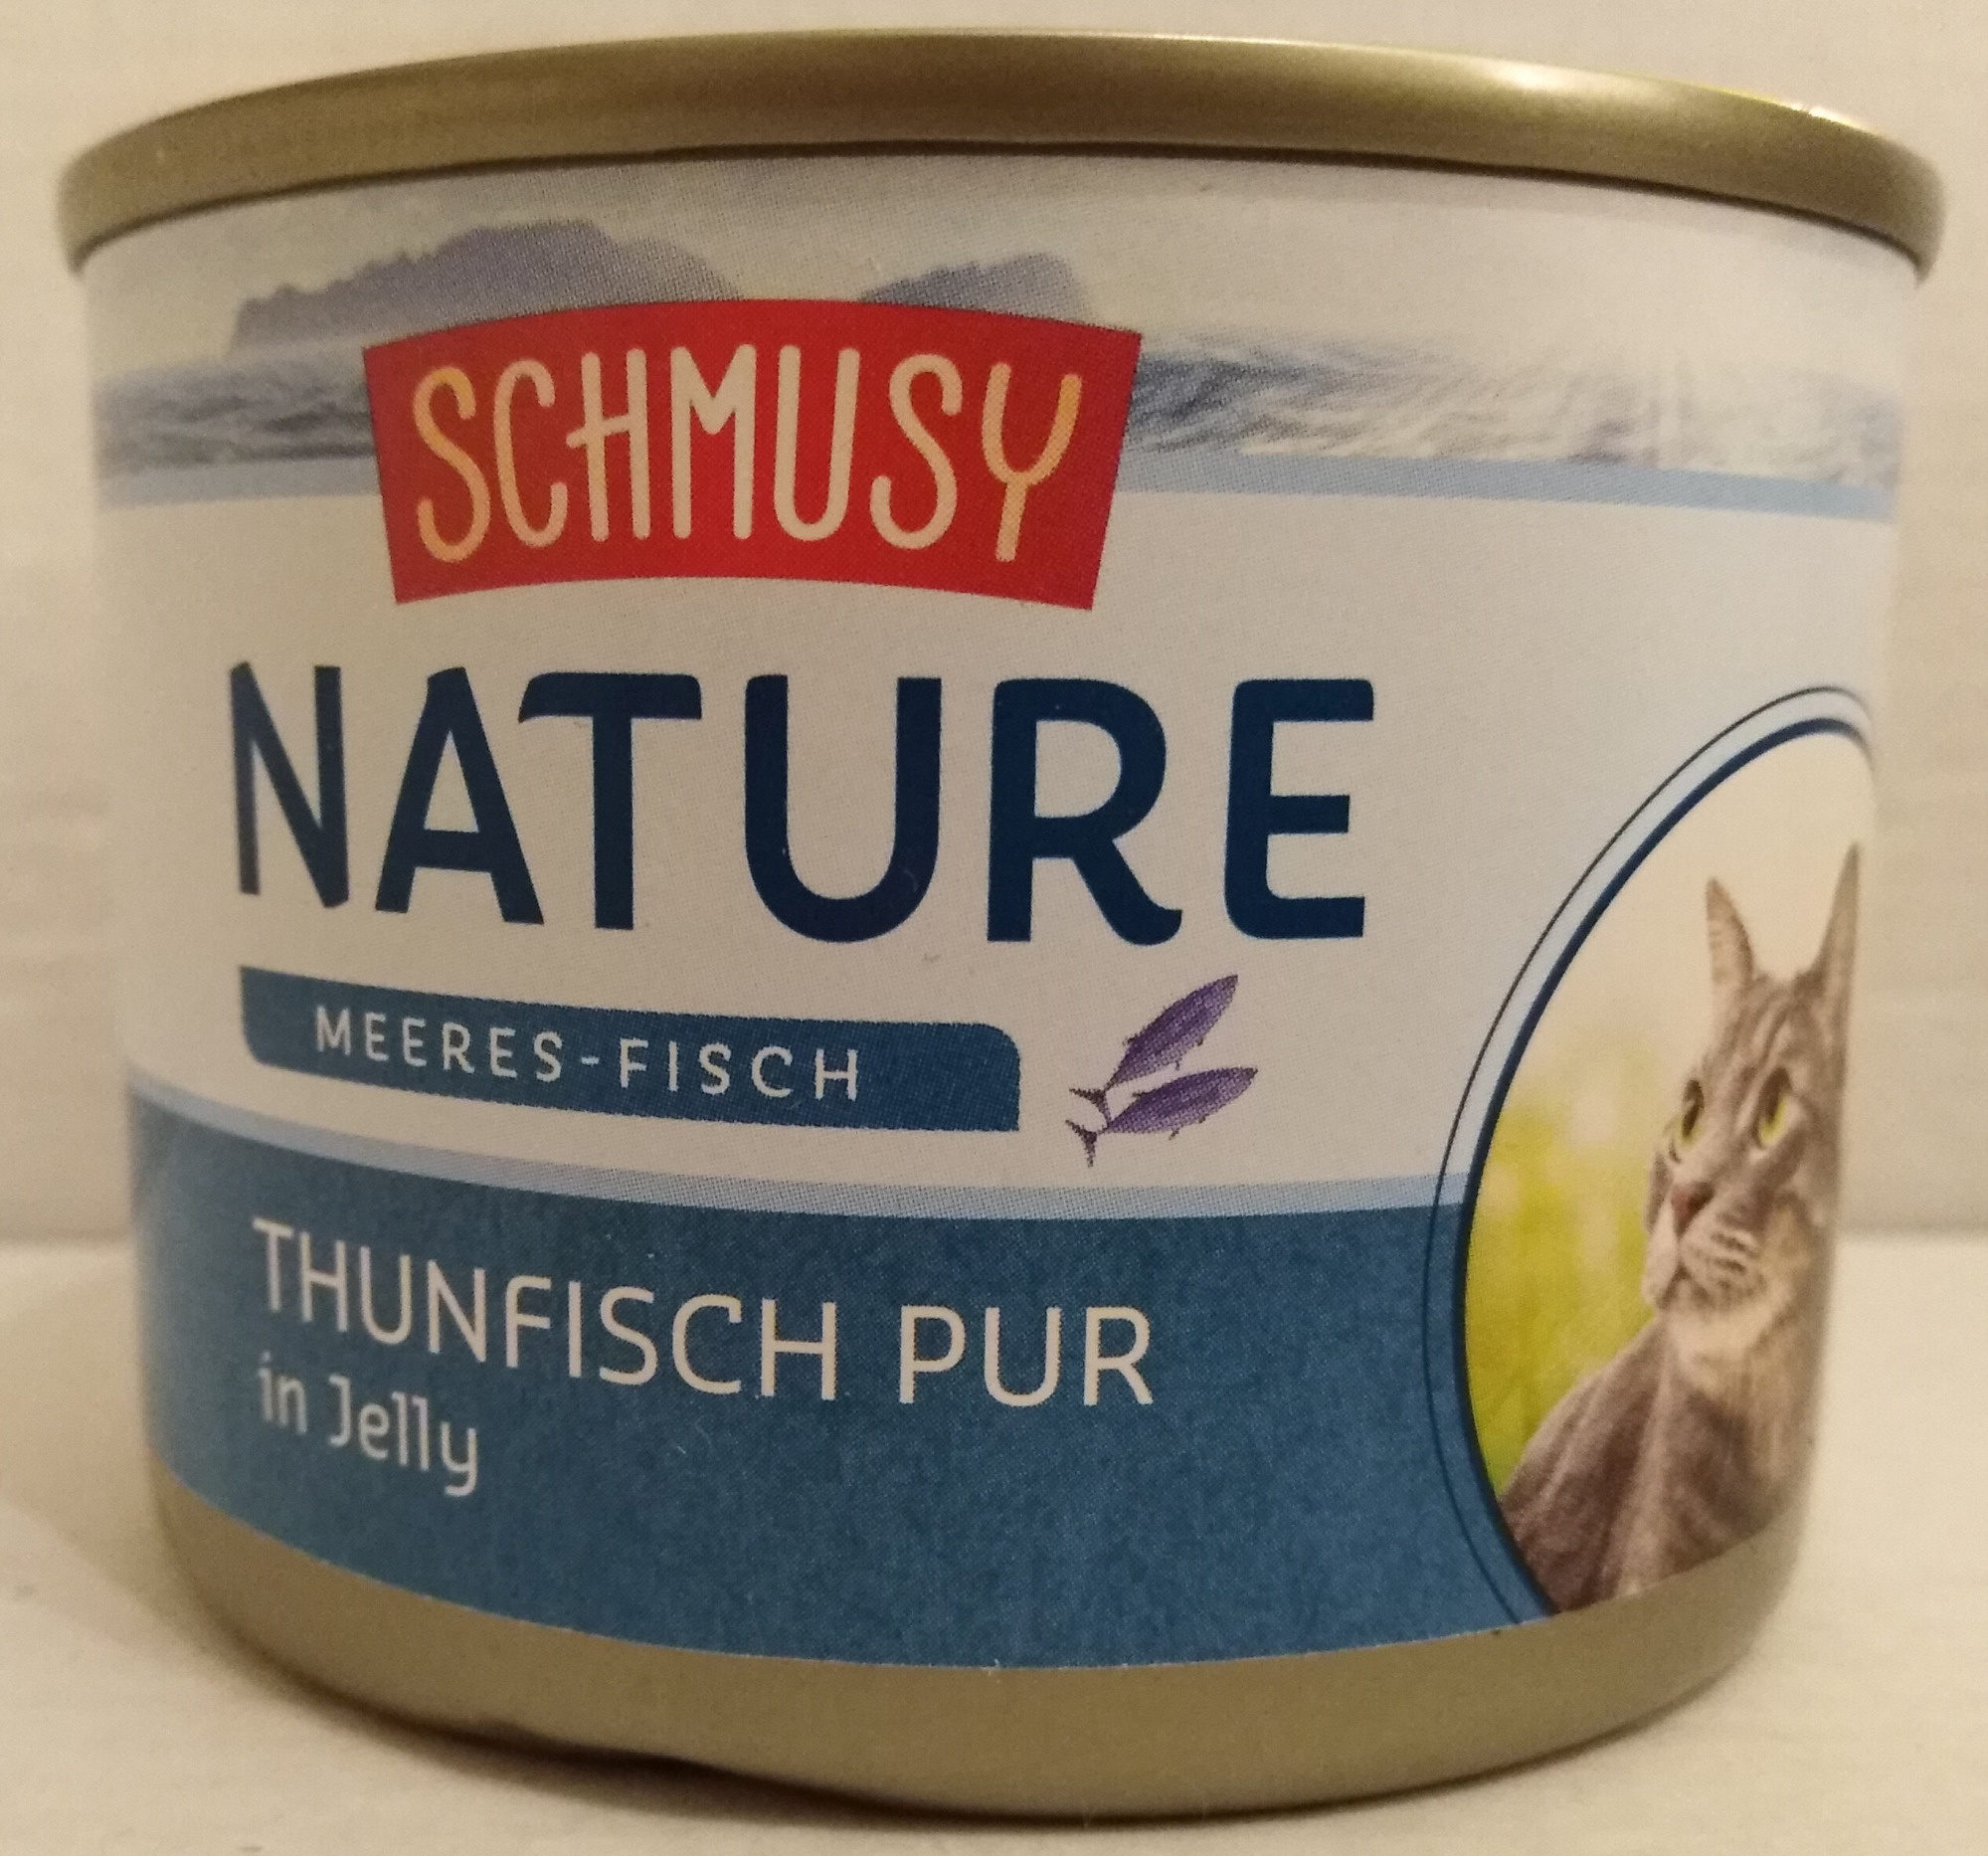 Meeres-Fisch Thunfisch Pur in Jelly - Product - de